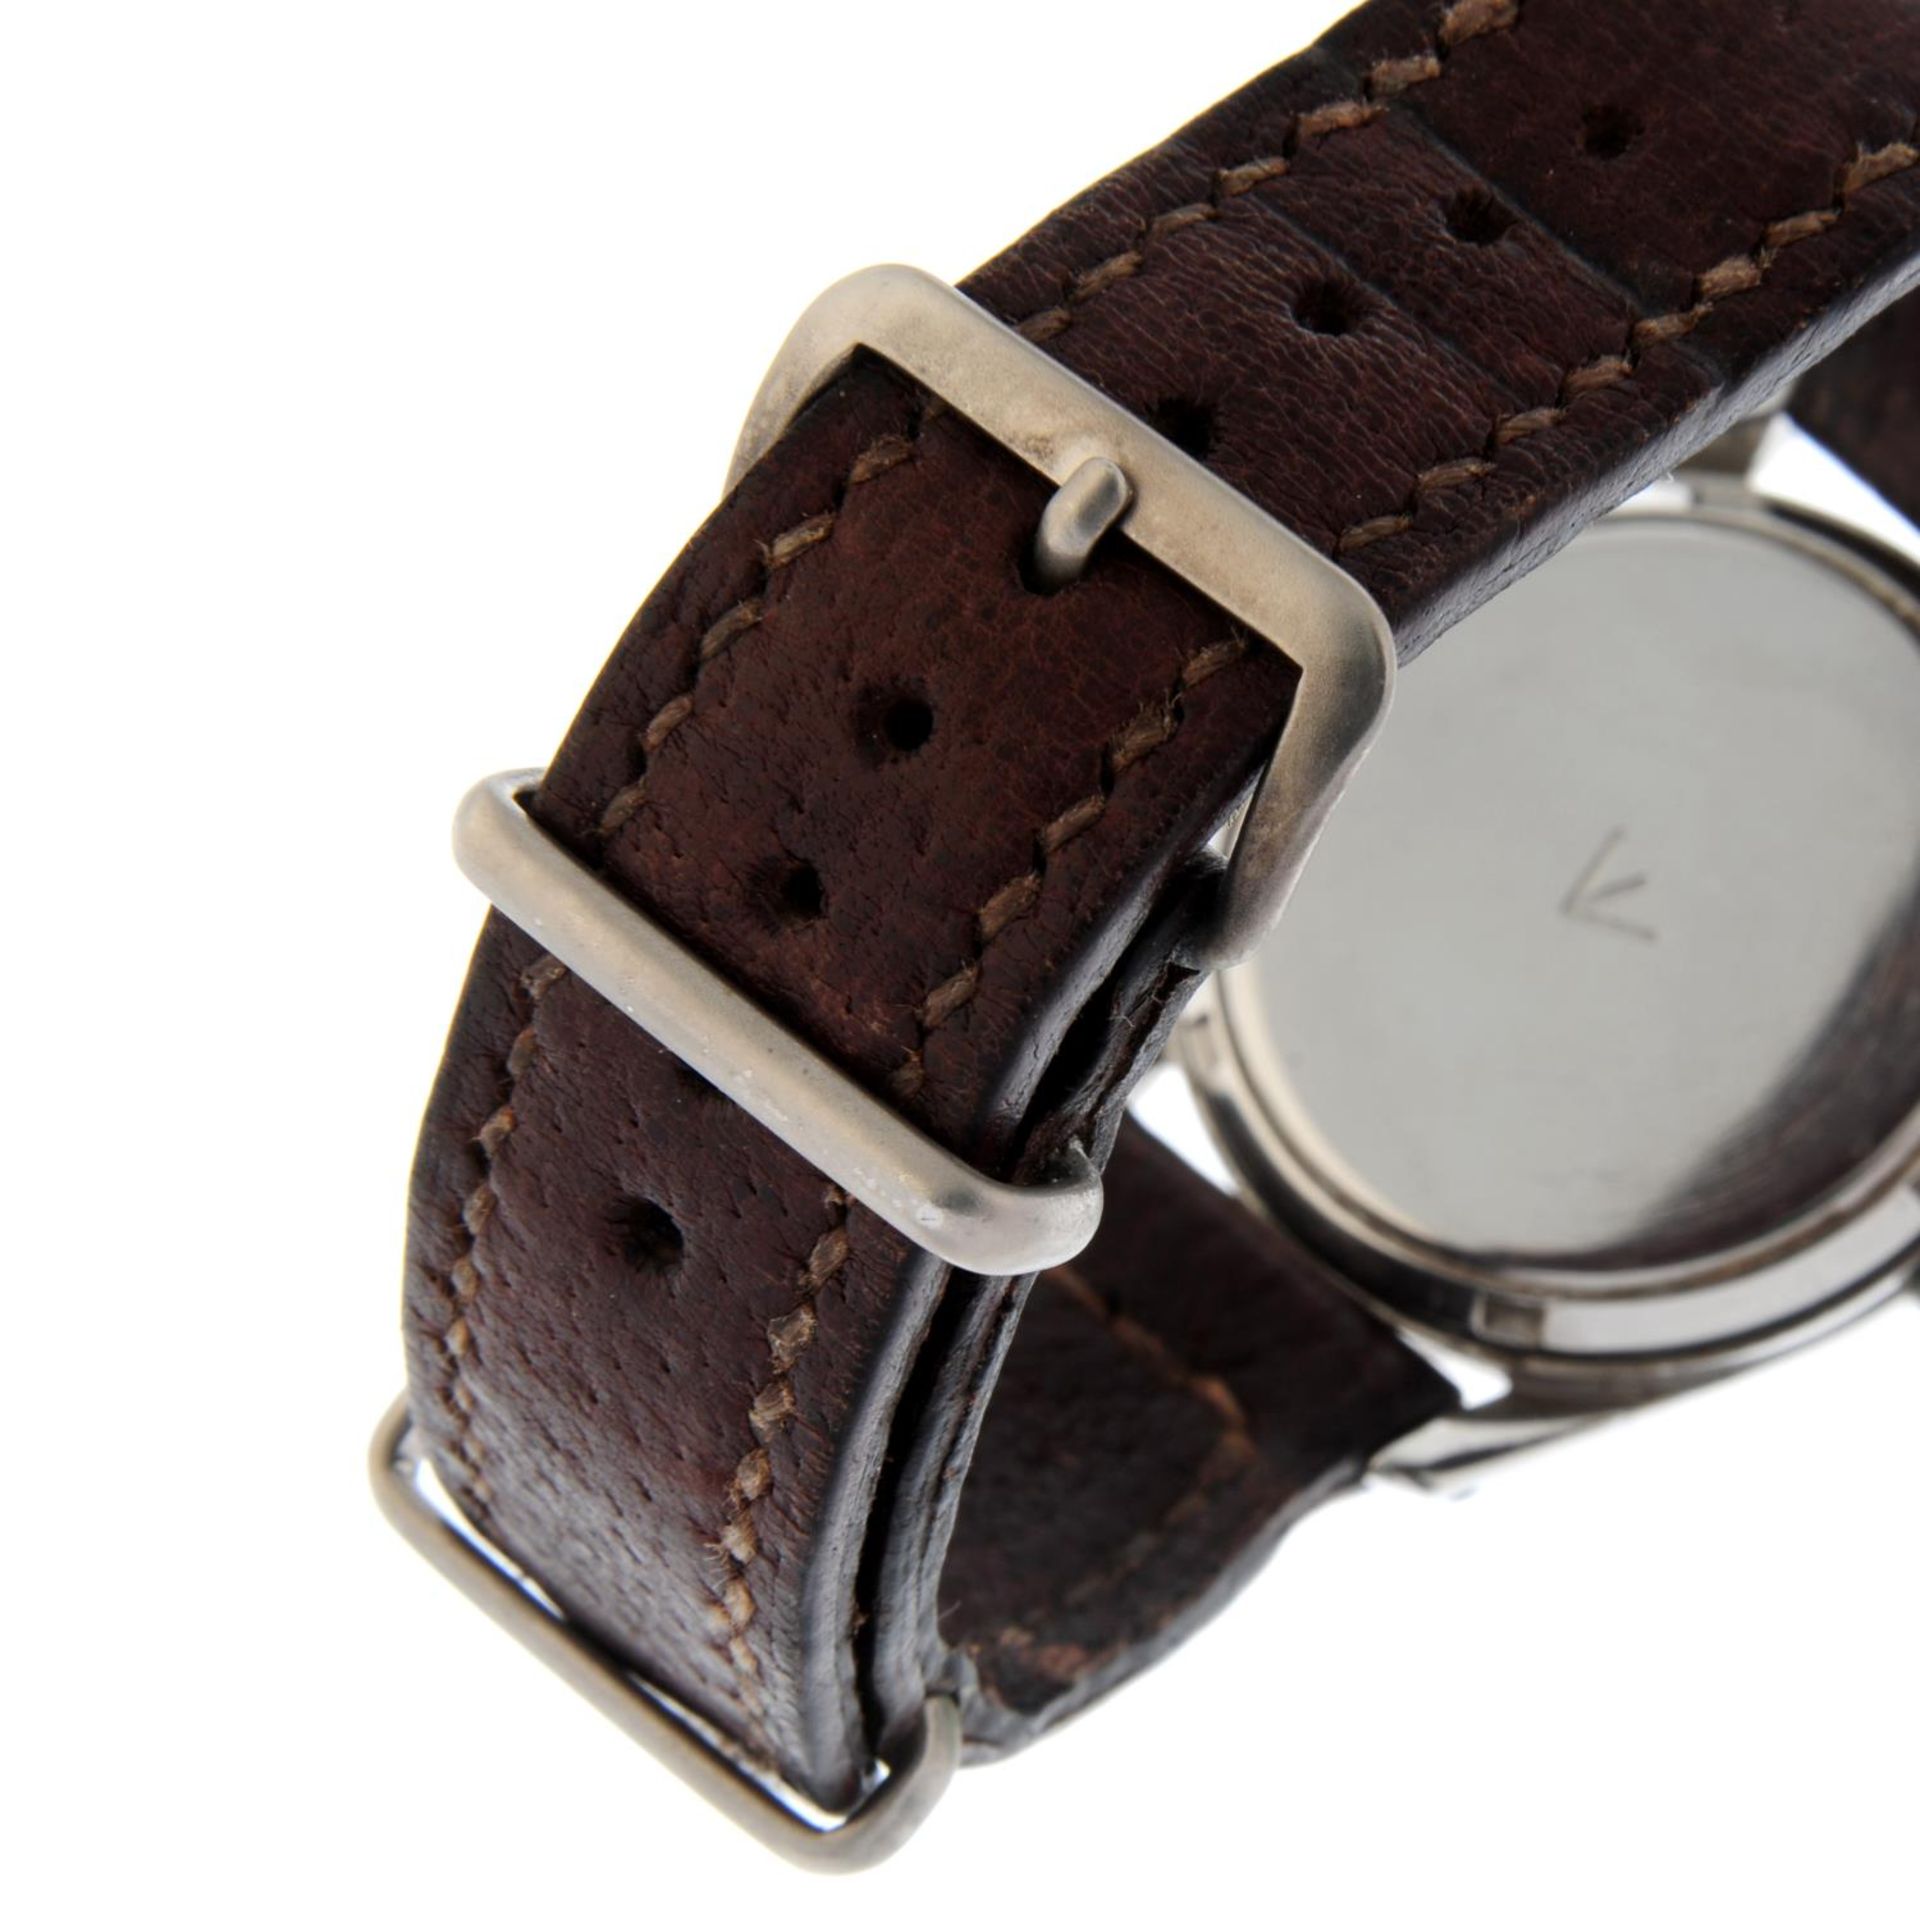 OMEGA - a wrist watch. - Image 2 of 4